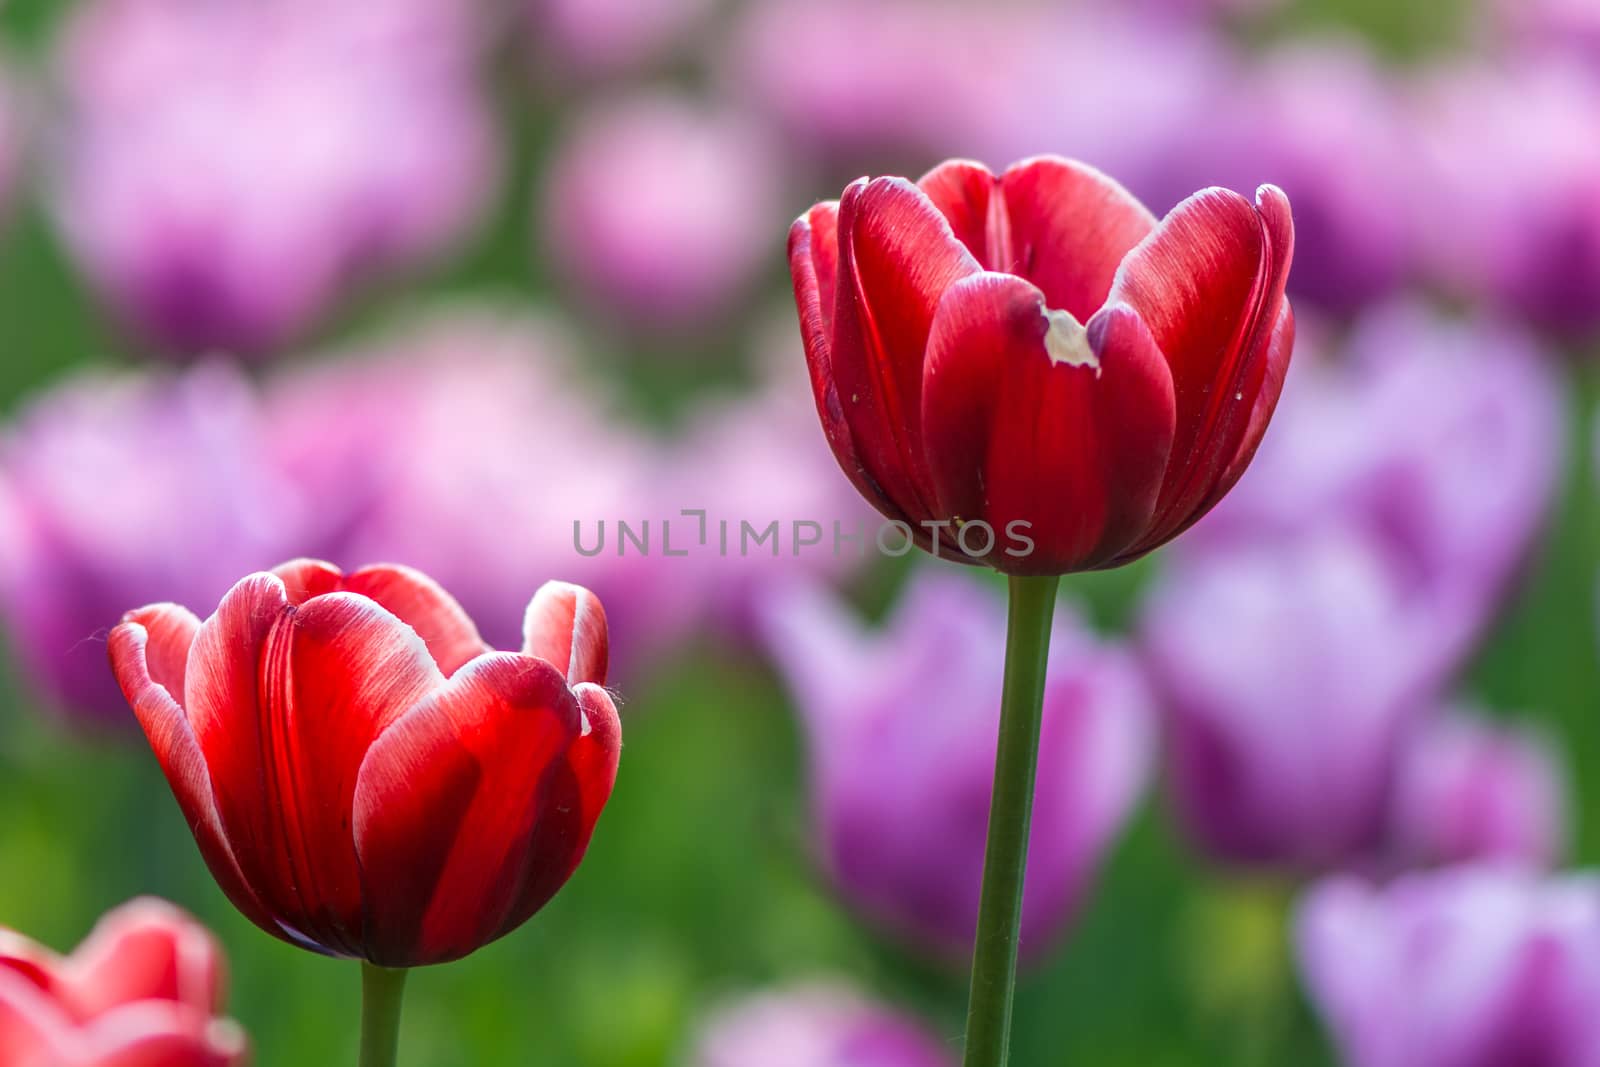 The red tulips in Beijing Botanical Garden.